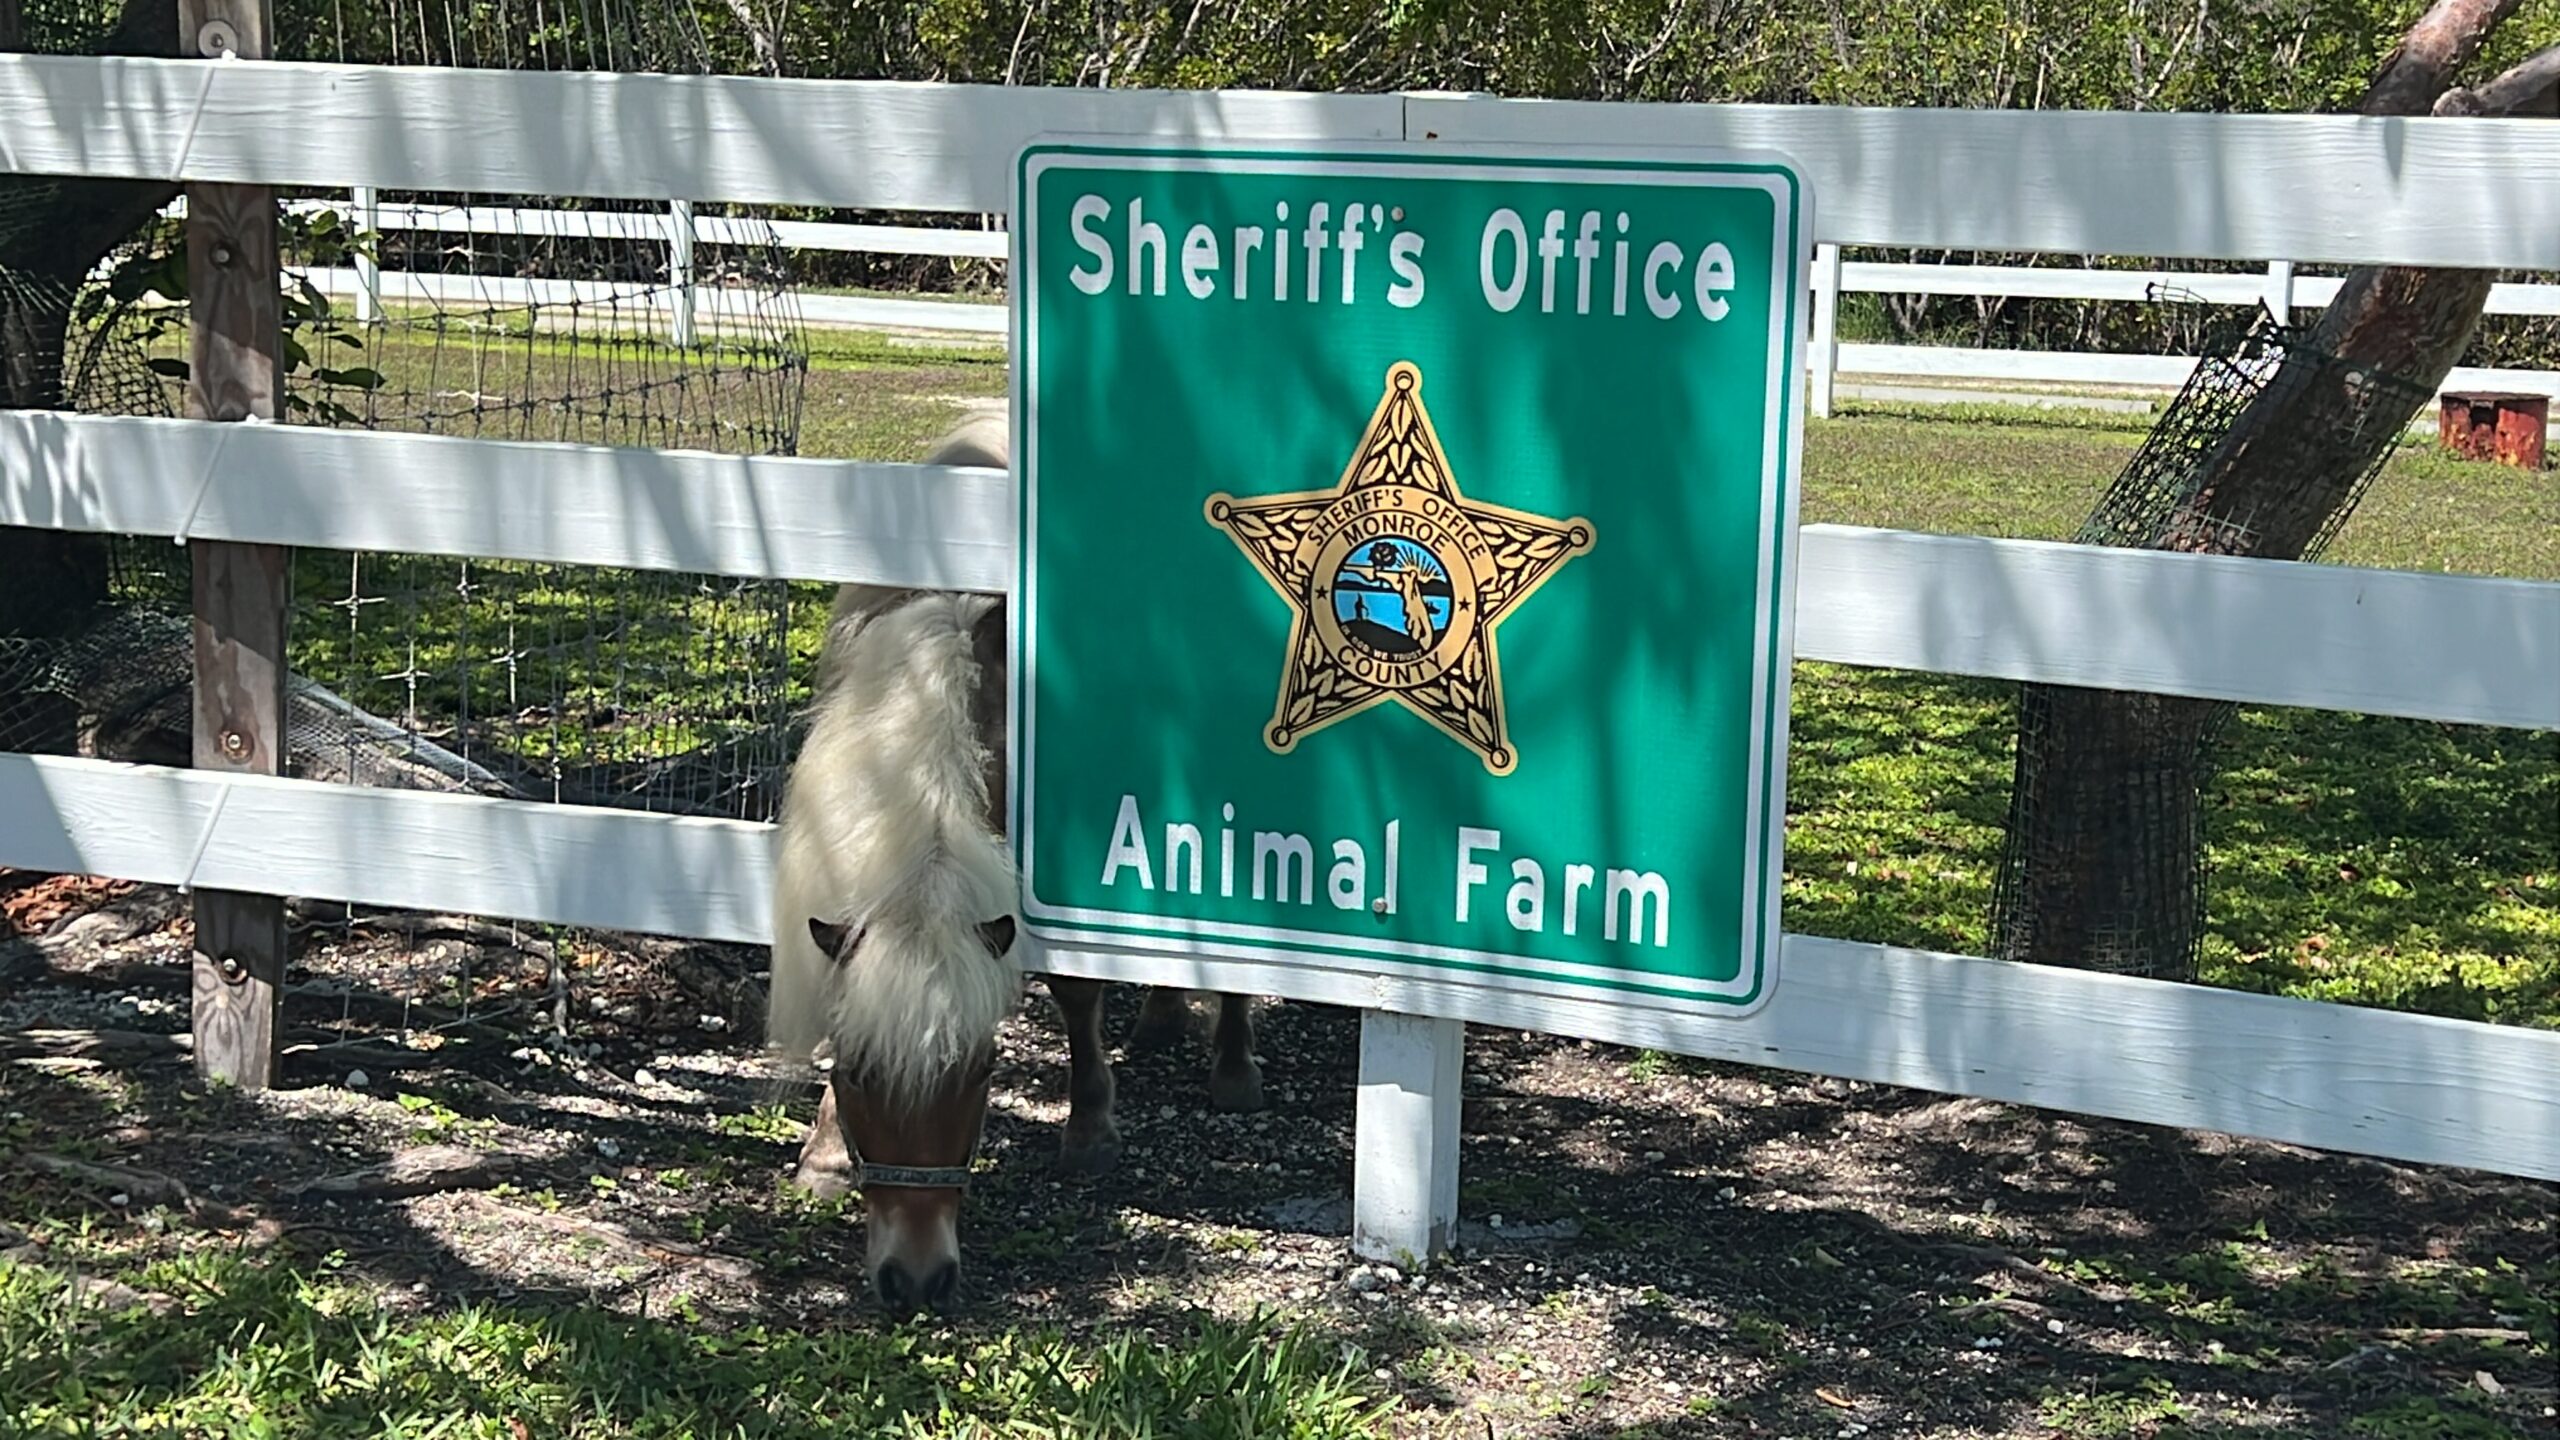 Monroe County Animal Farm sign with min horse